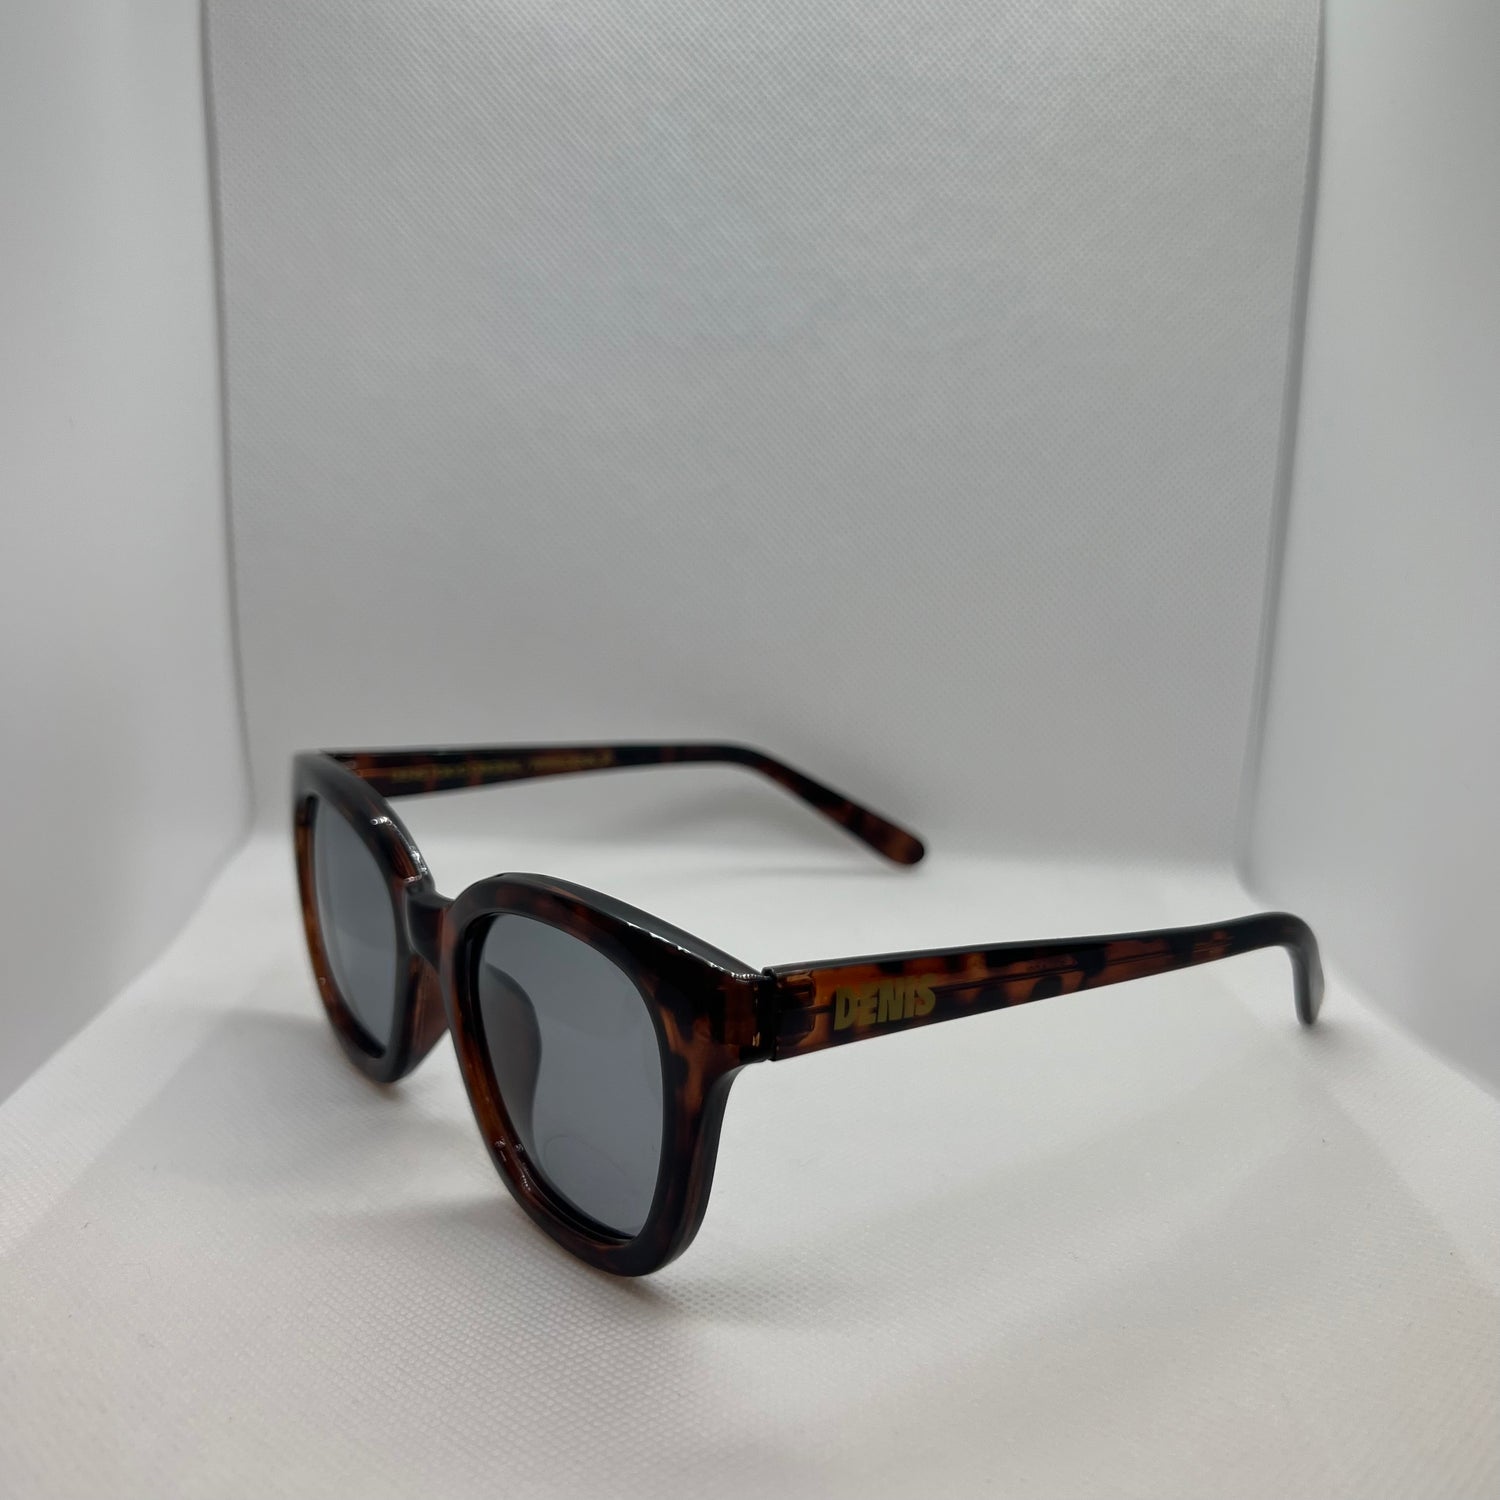 DENIS Sunglasses Bekko Camo Polarized Lenses